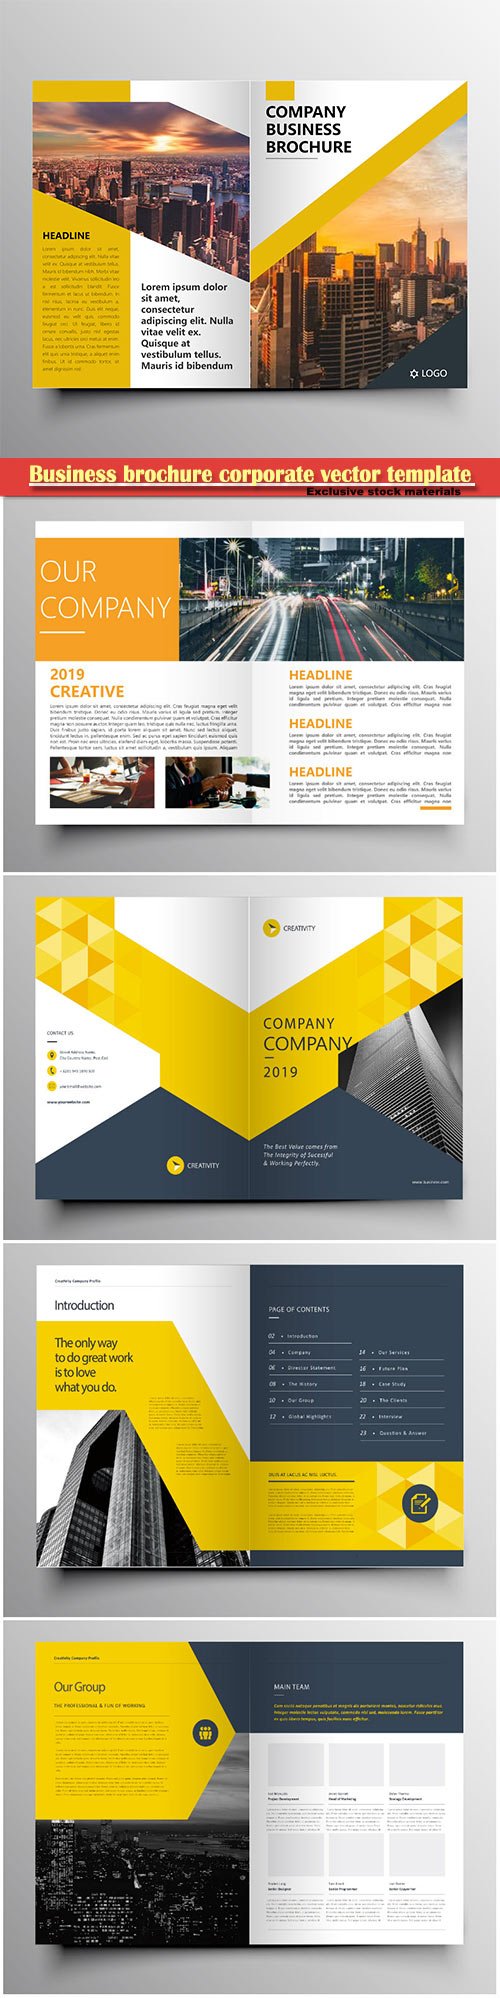 Business brochure corporate vector template # 39